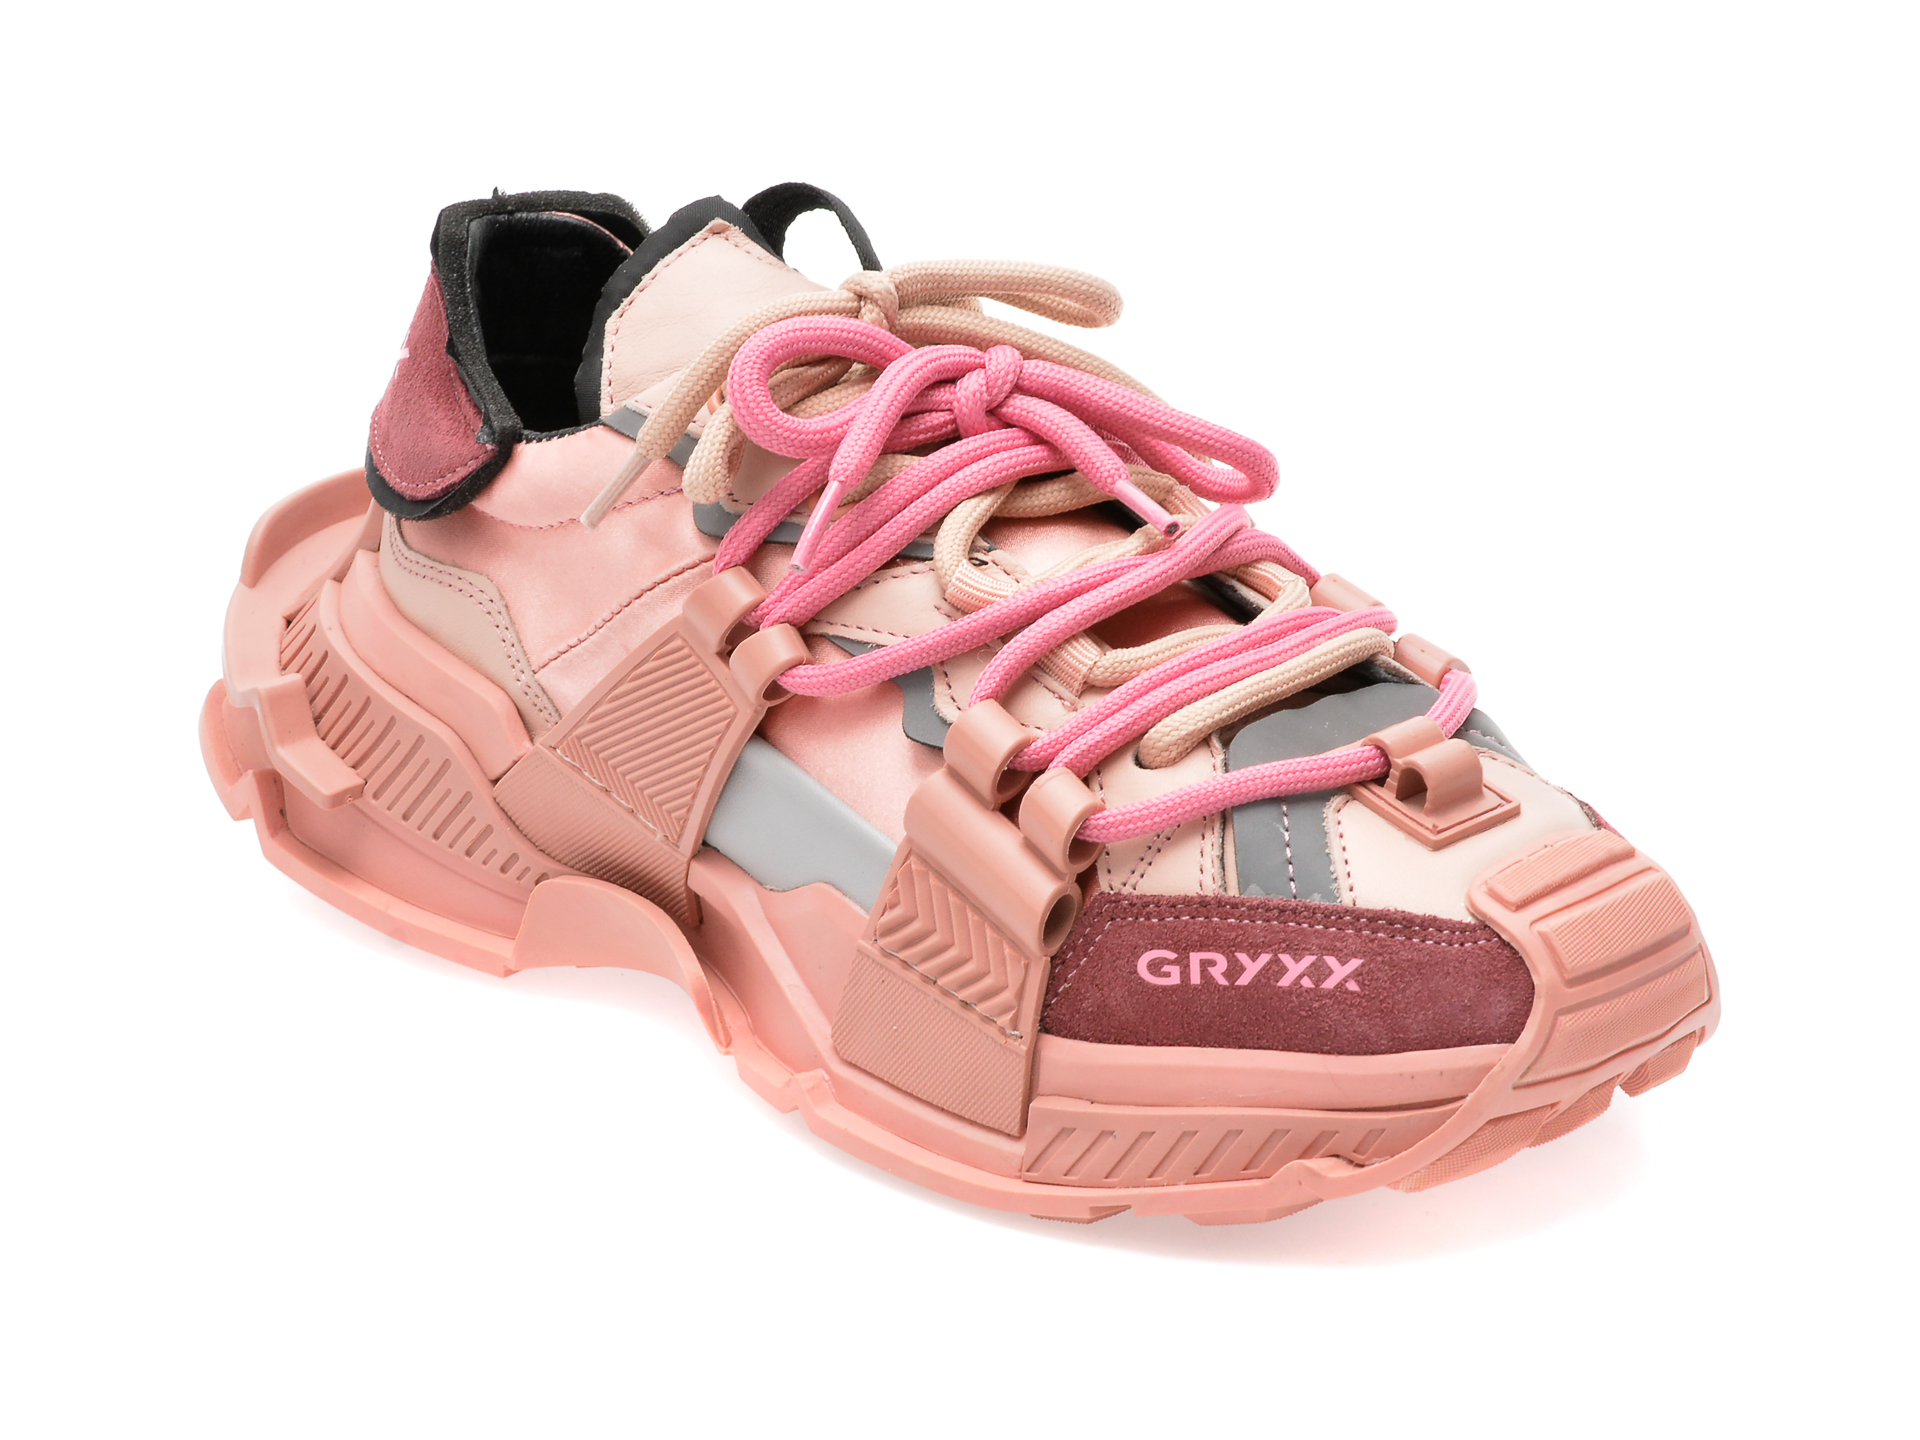 Pantofi GRYXX roz, AD61, din material textil si piele ecologica